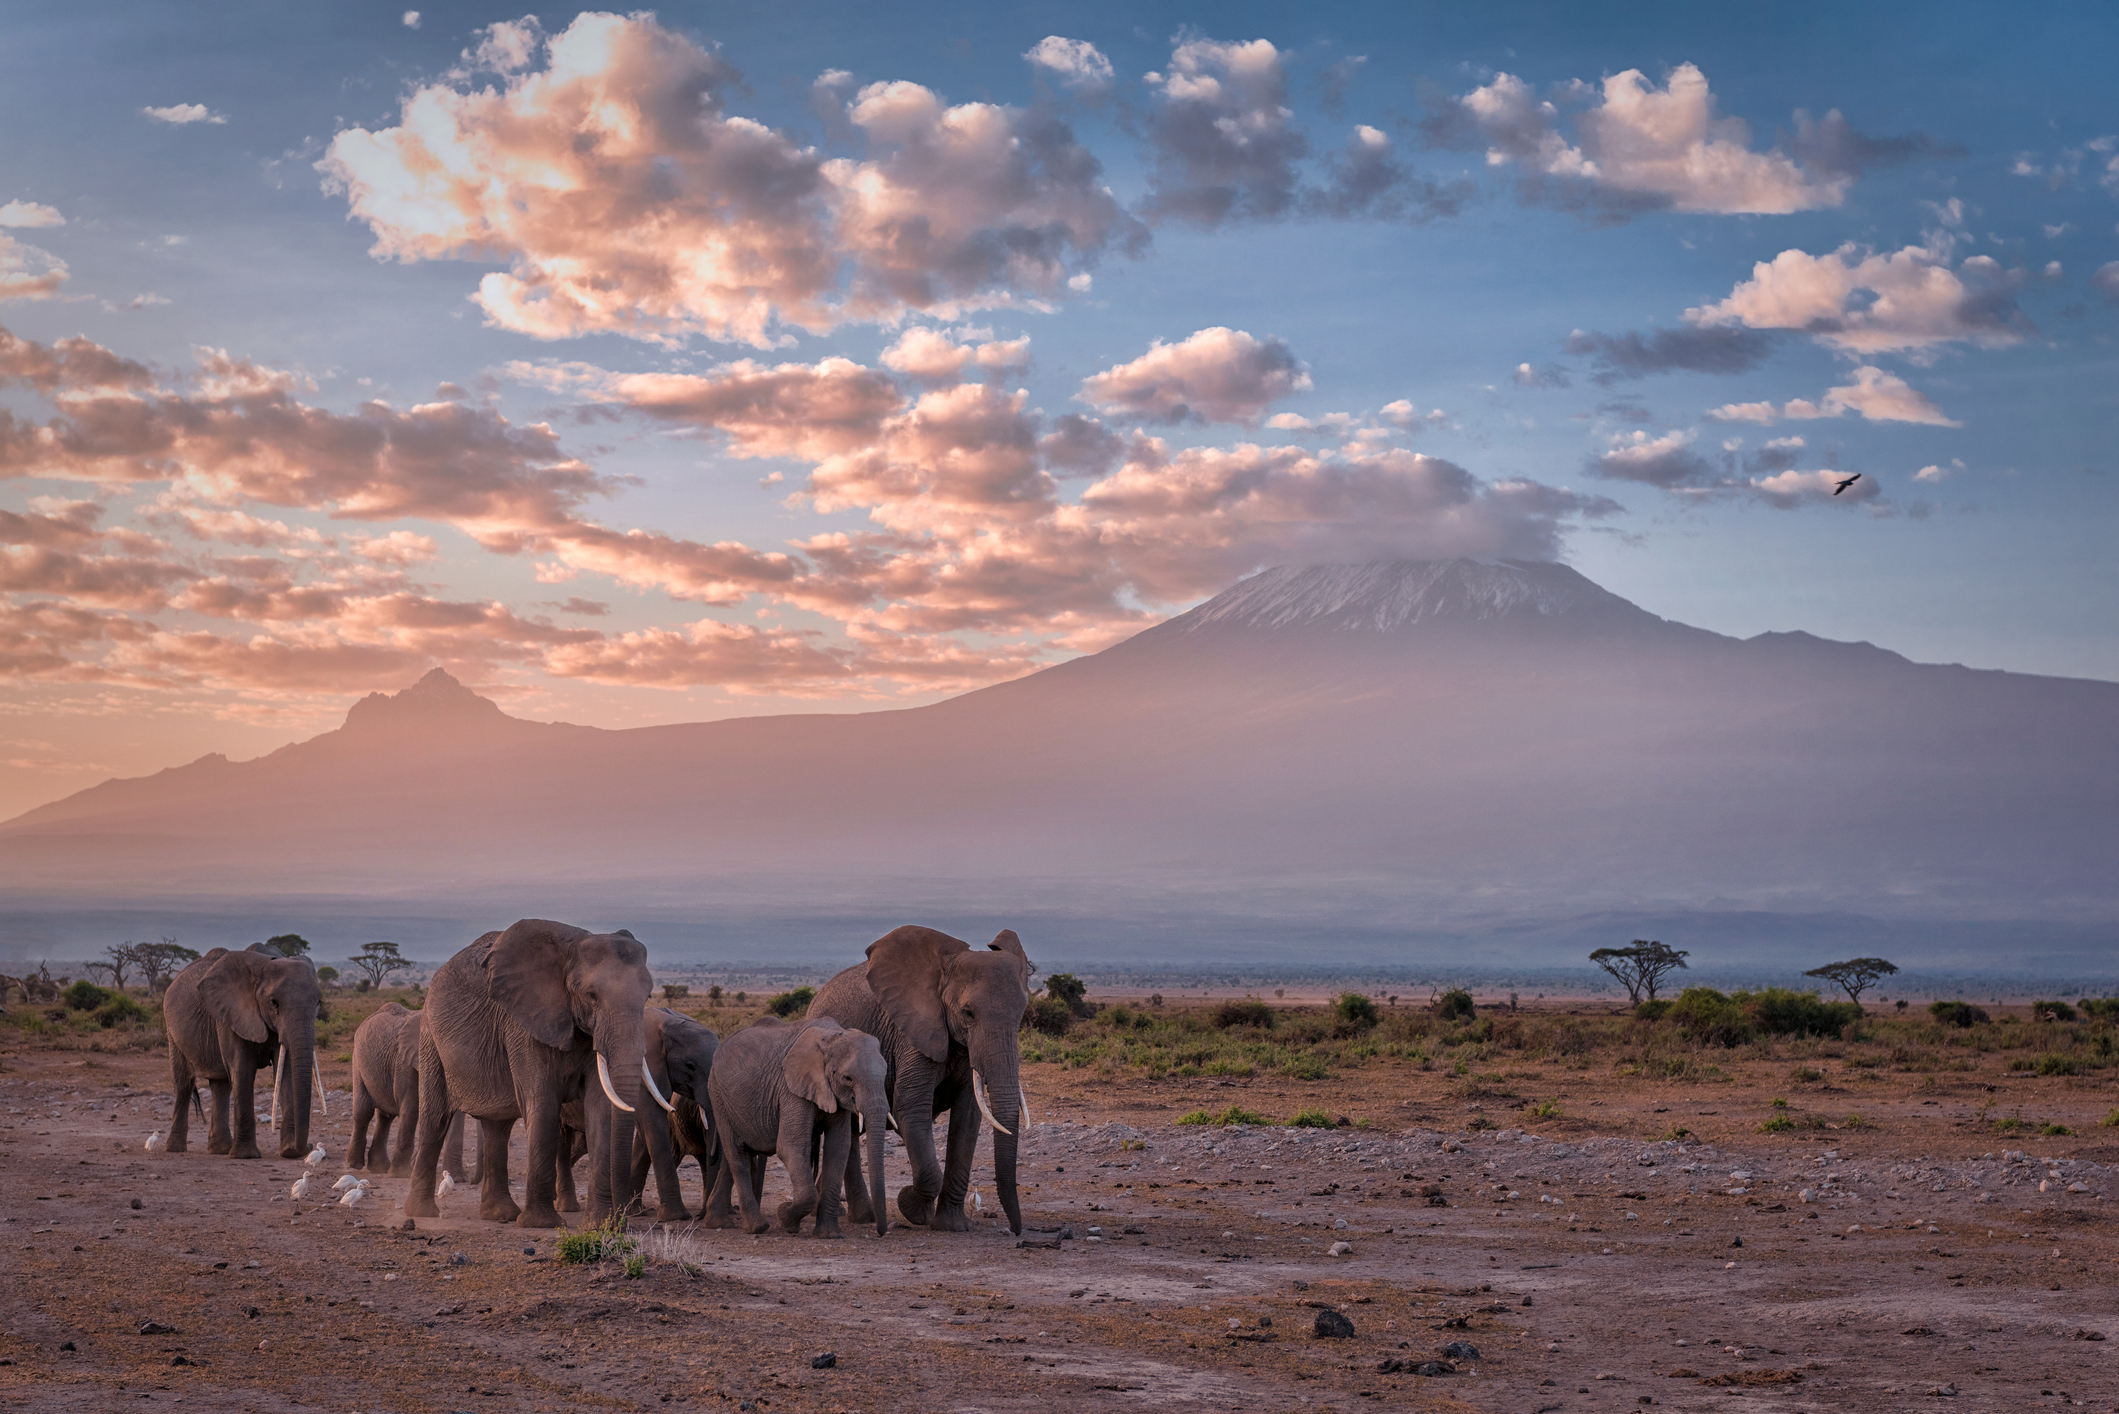 Elephants in a line at sunrise in front of Mt. Kilimanjaro, Amboseli National Park, Kenya, East Africa